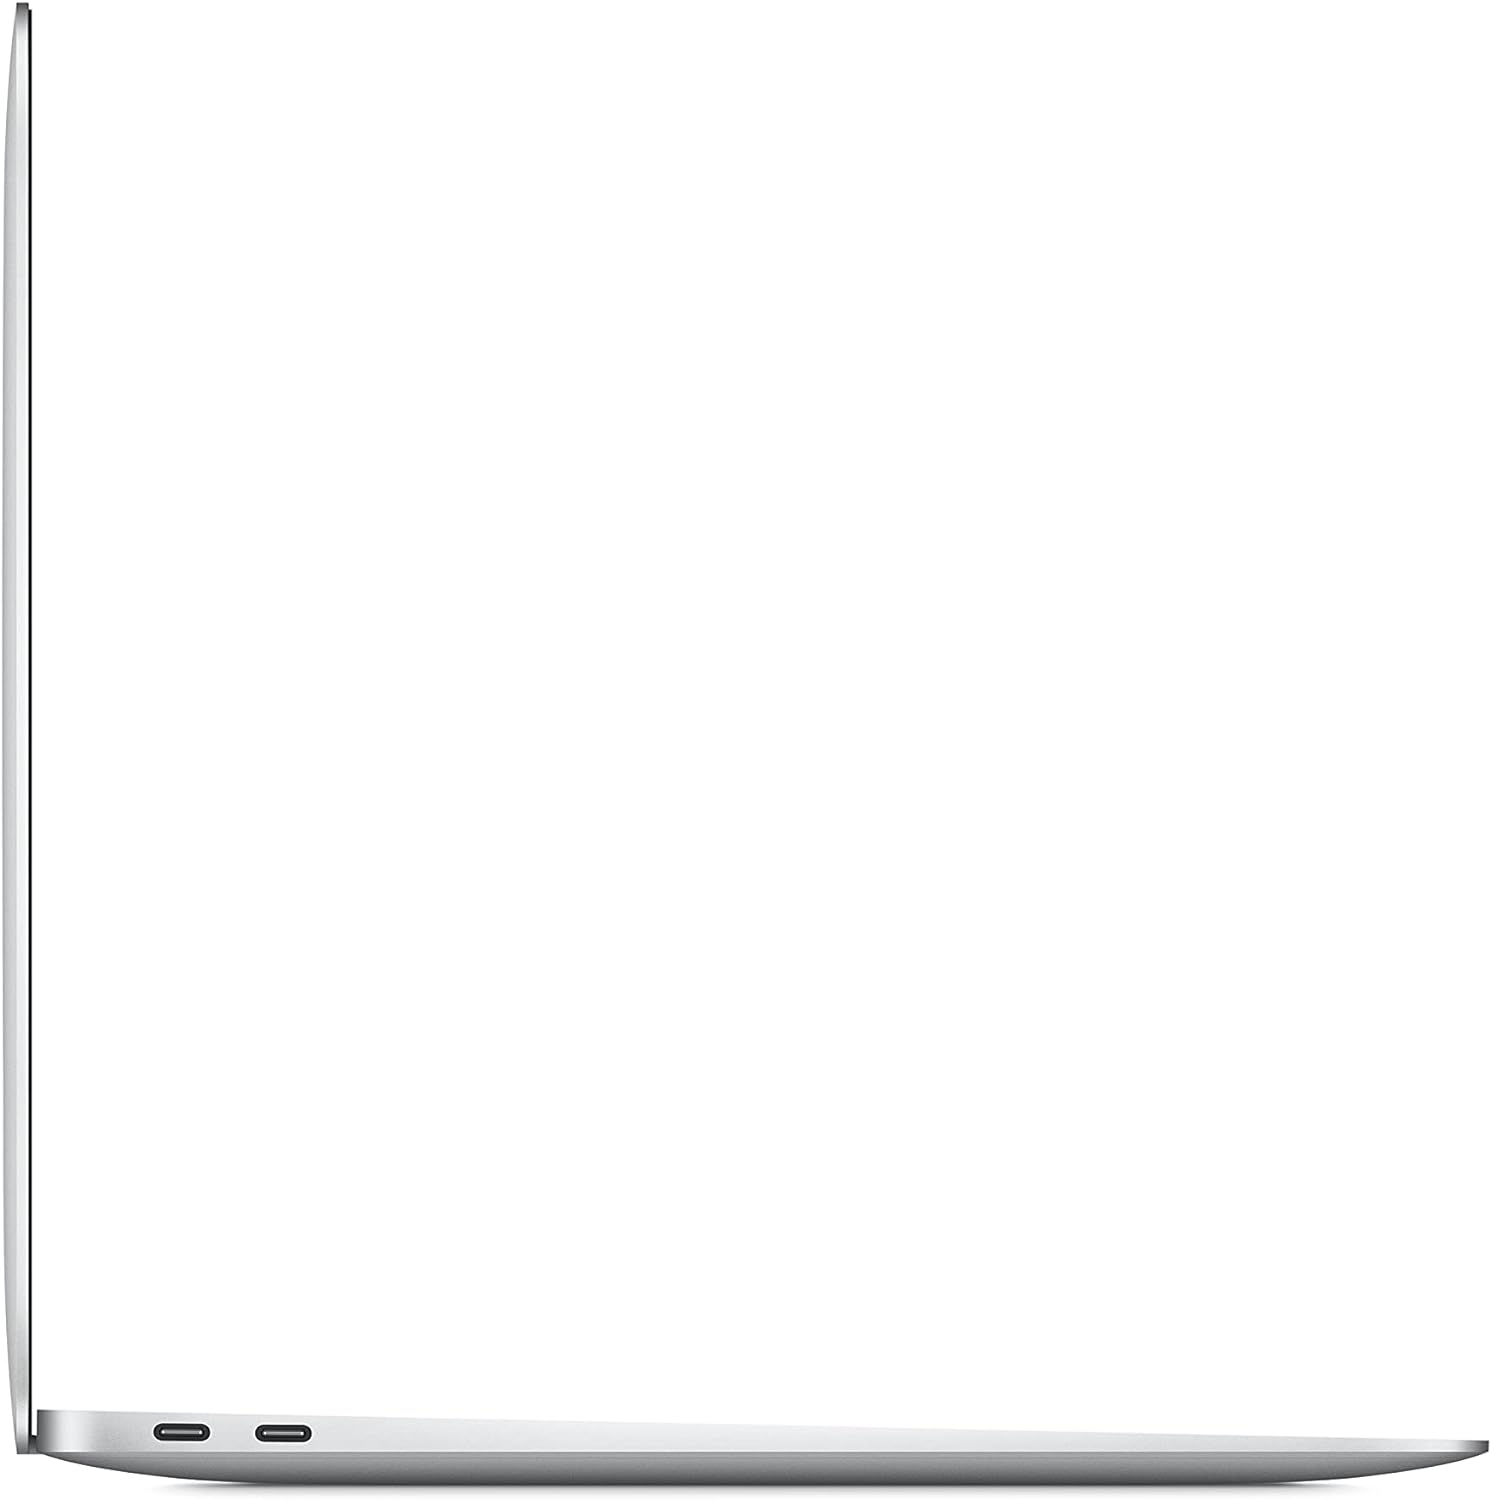 Apple MacBook Air 13-inch Laptop - Stunning 13.3” Retina display for vivid visuals. 0194252057179